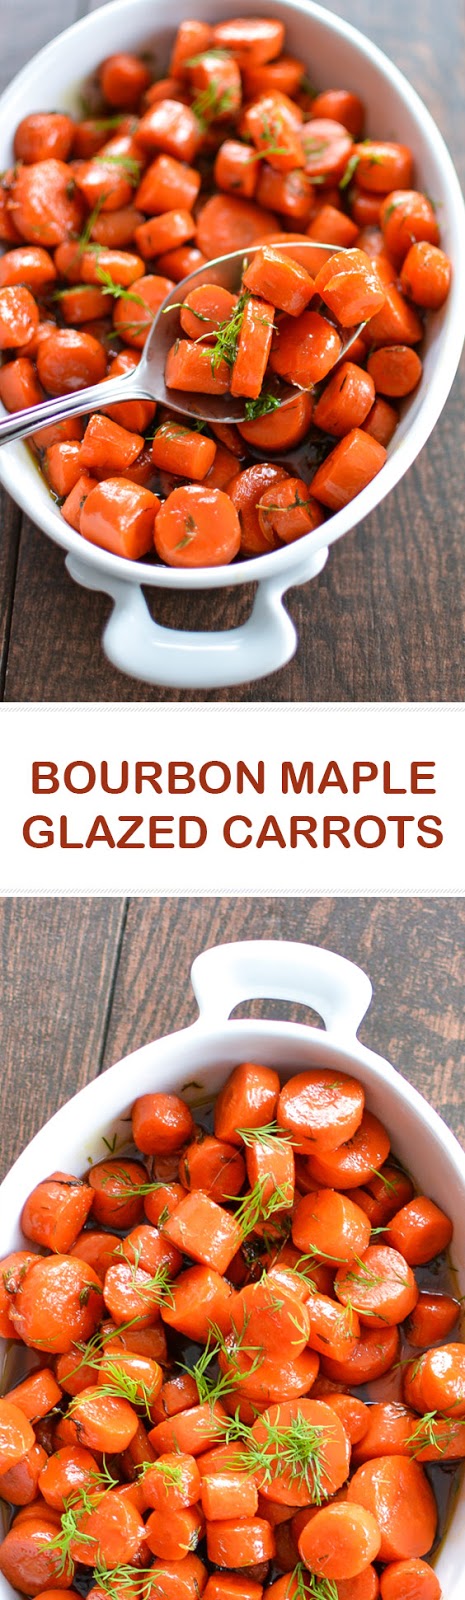 Bourbon Maple Glazed Carrots